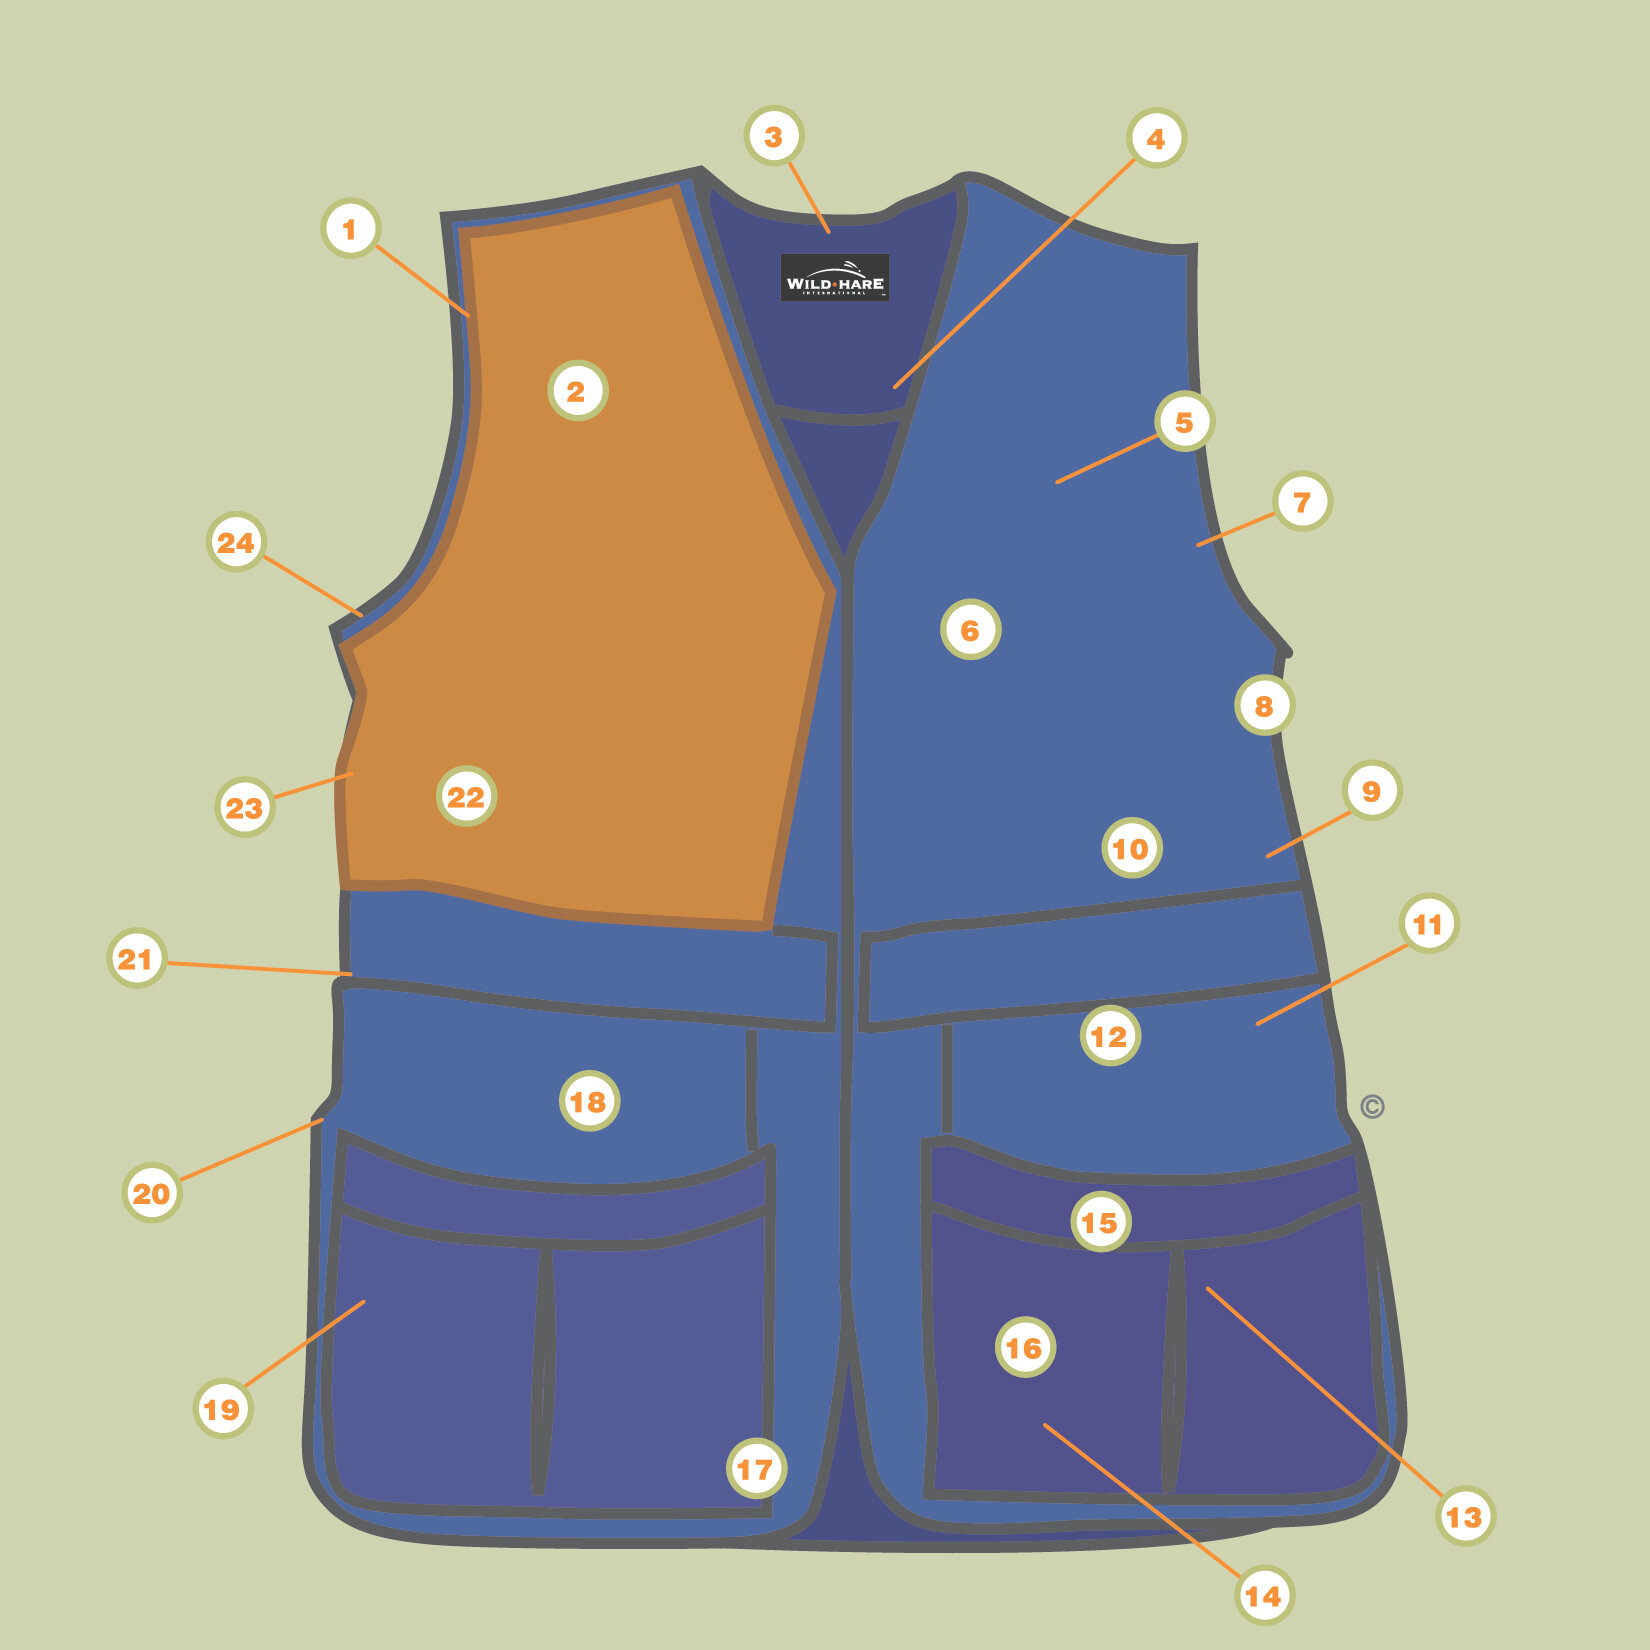  Wild•Hare International shooting vest spot illustration  Design, illustration, branding and creative direction by Chuck Mitchell 